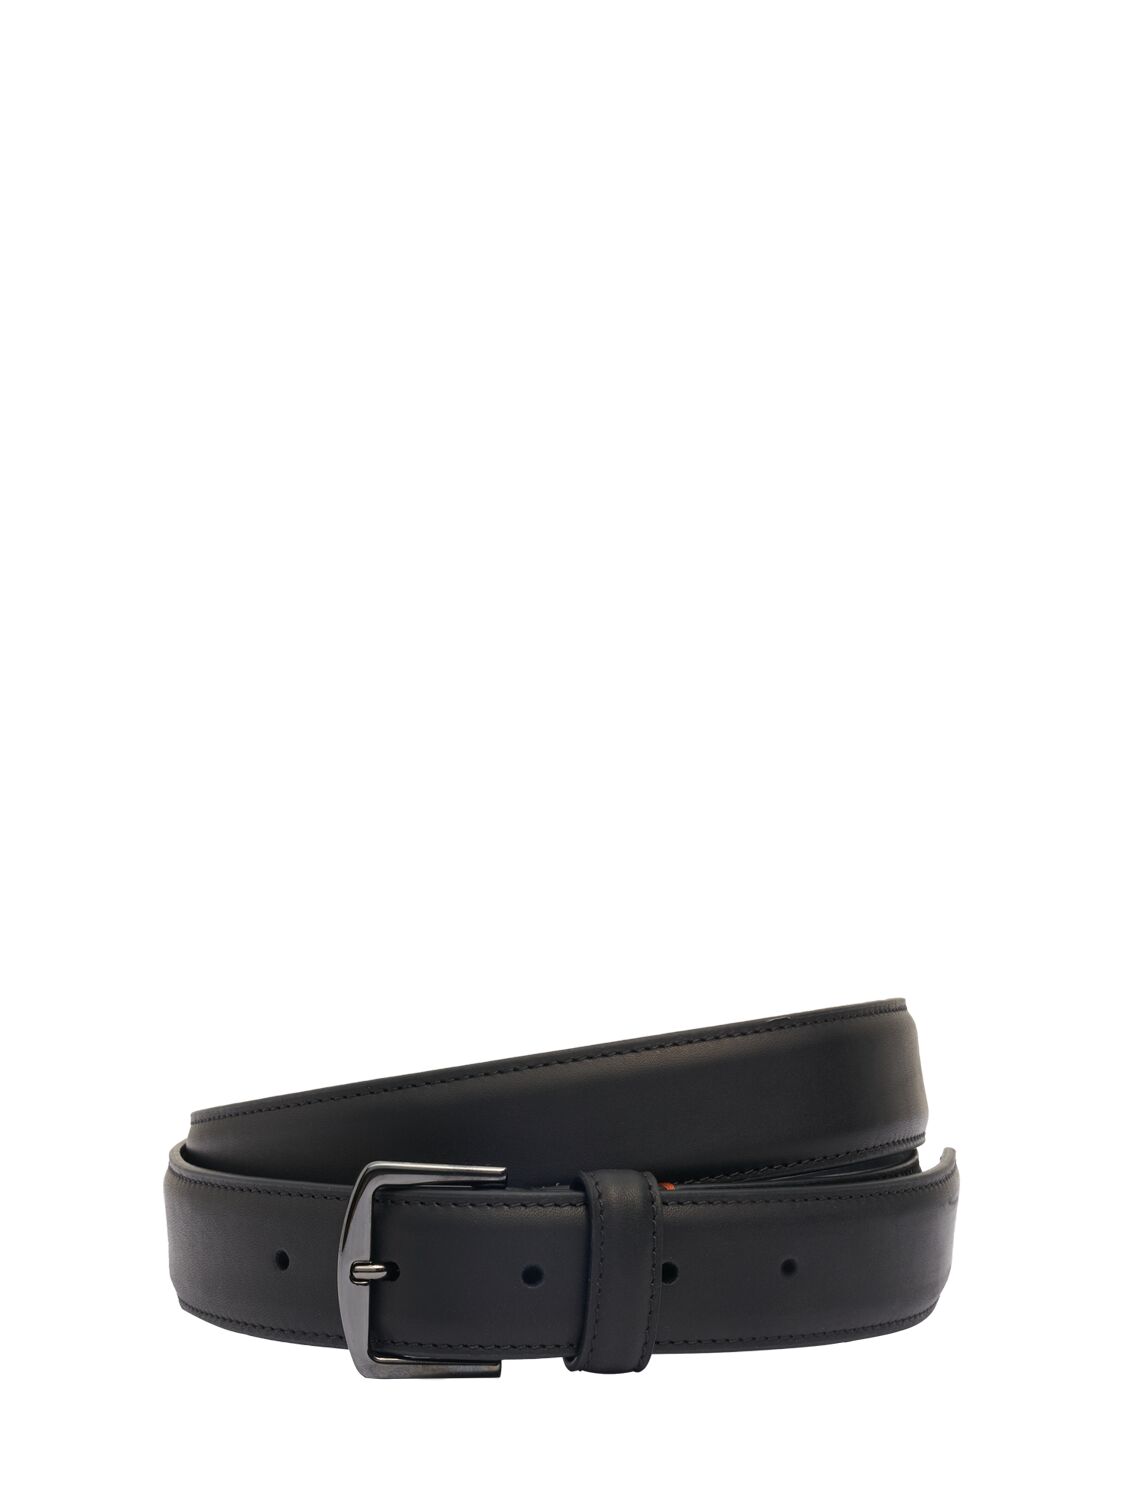 Image of Travis Leather Belt